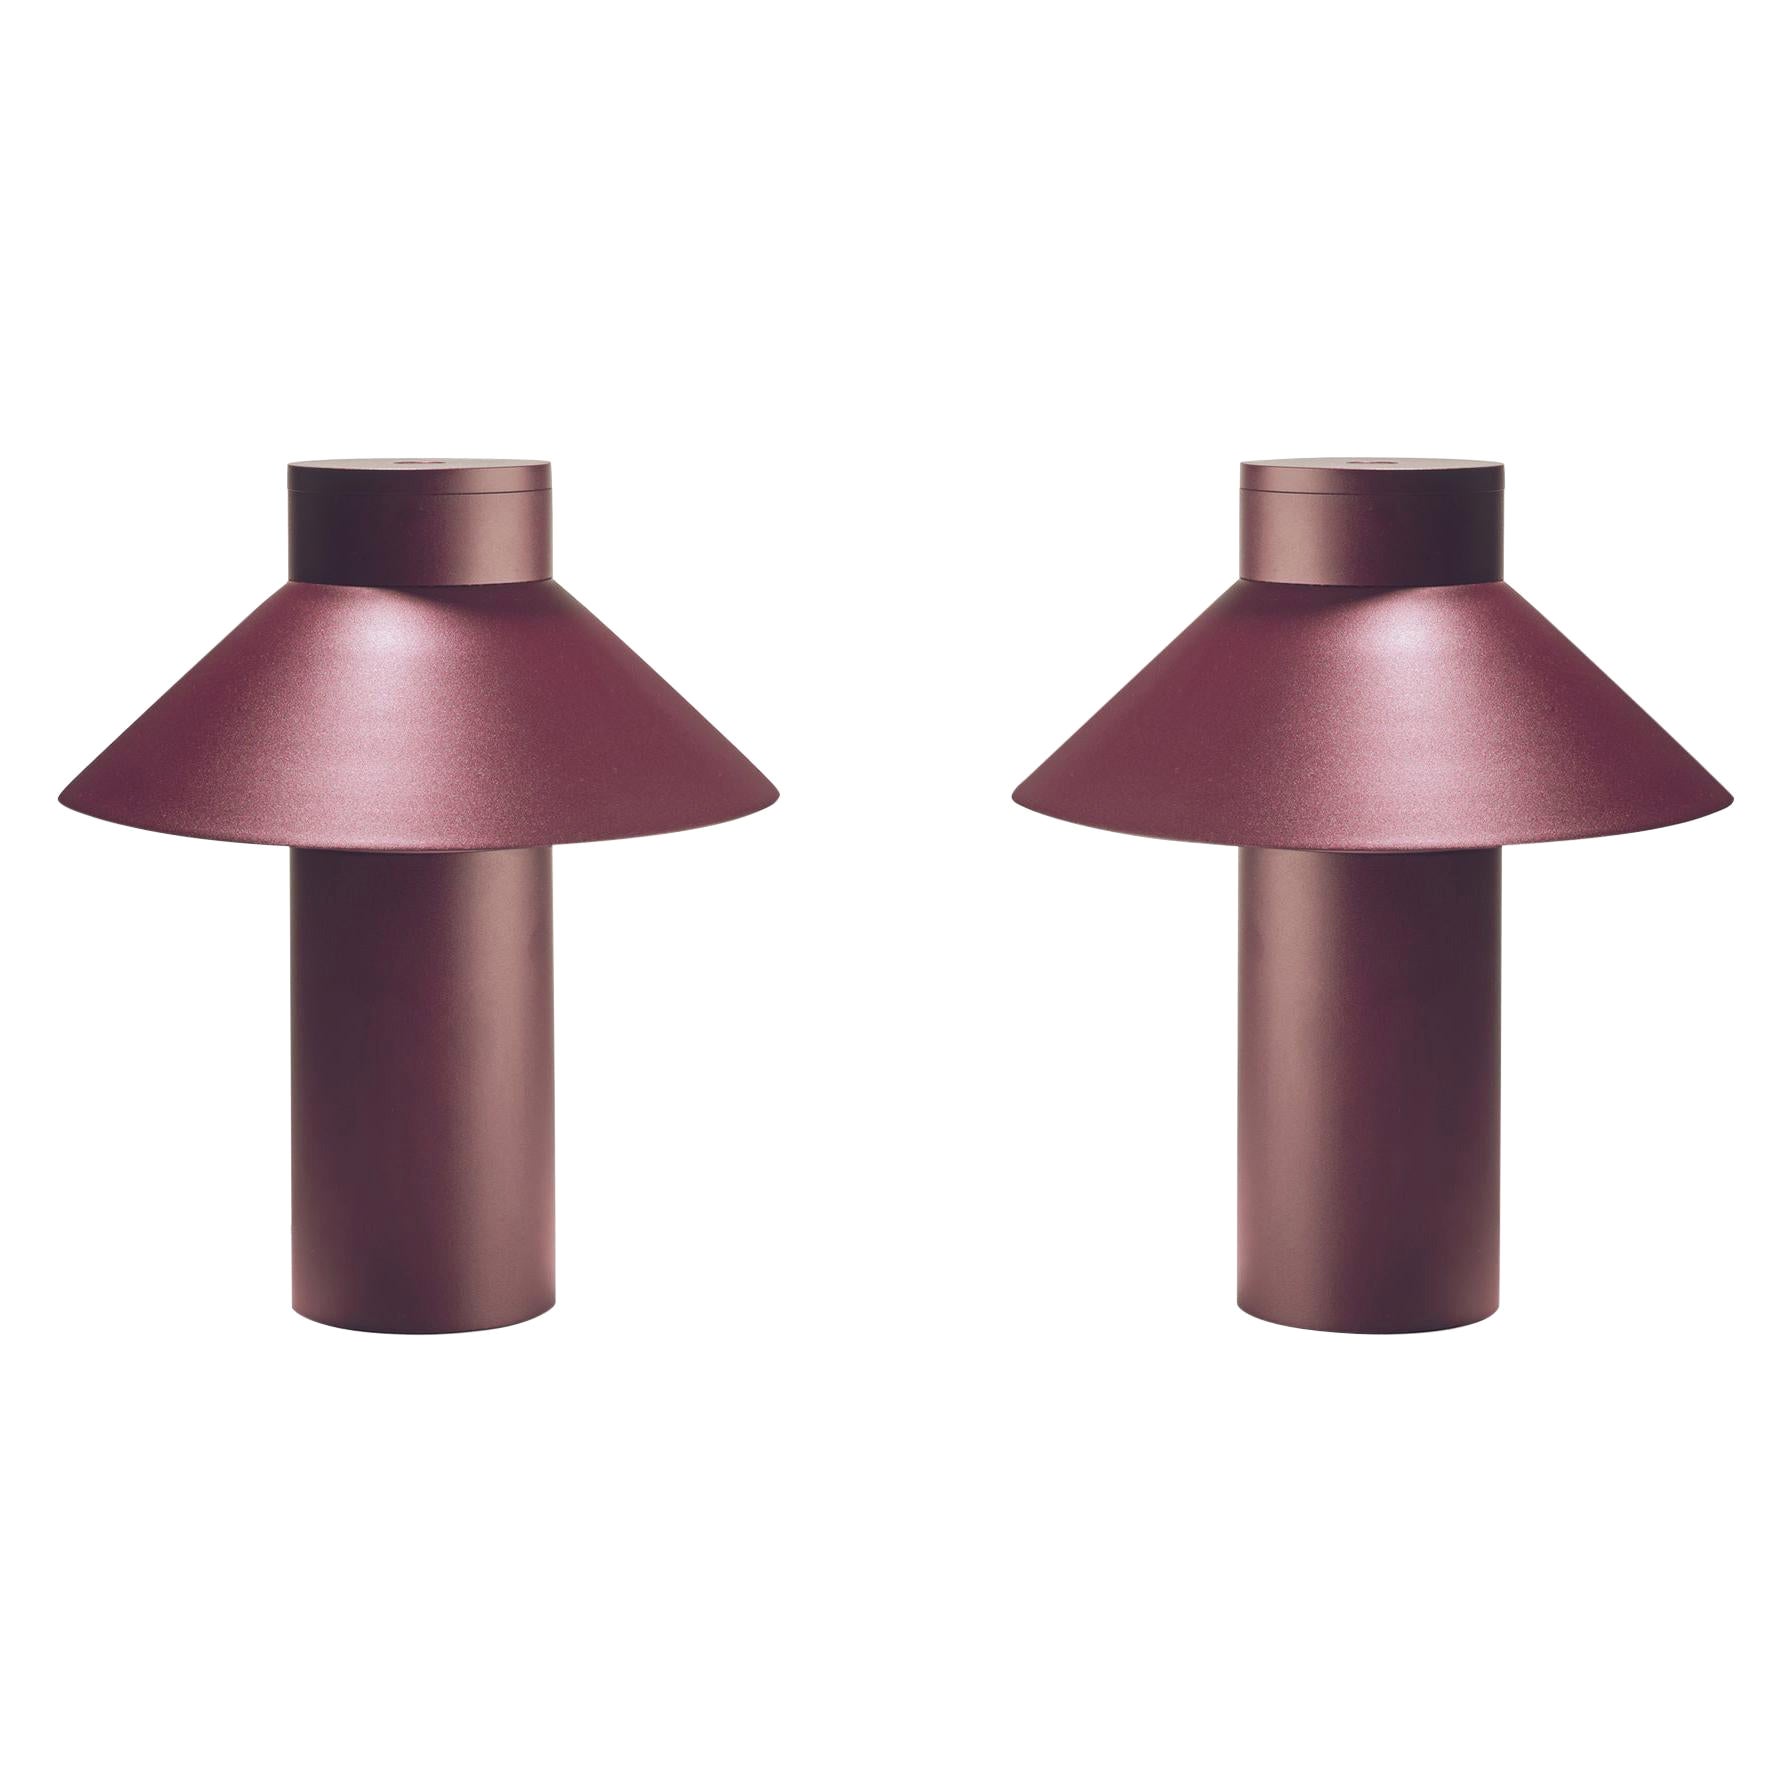 Set of Two Joe Colombo 'Riscio' Steel Table Lamps by Karakter For Sale